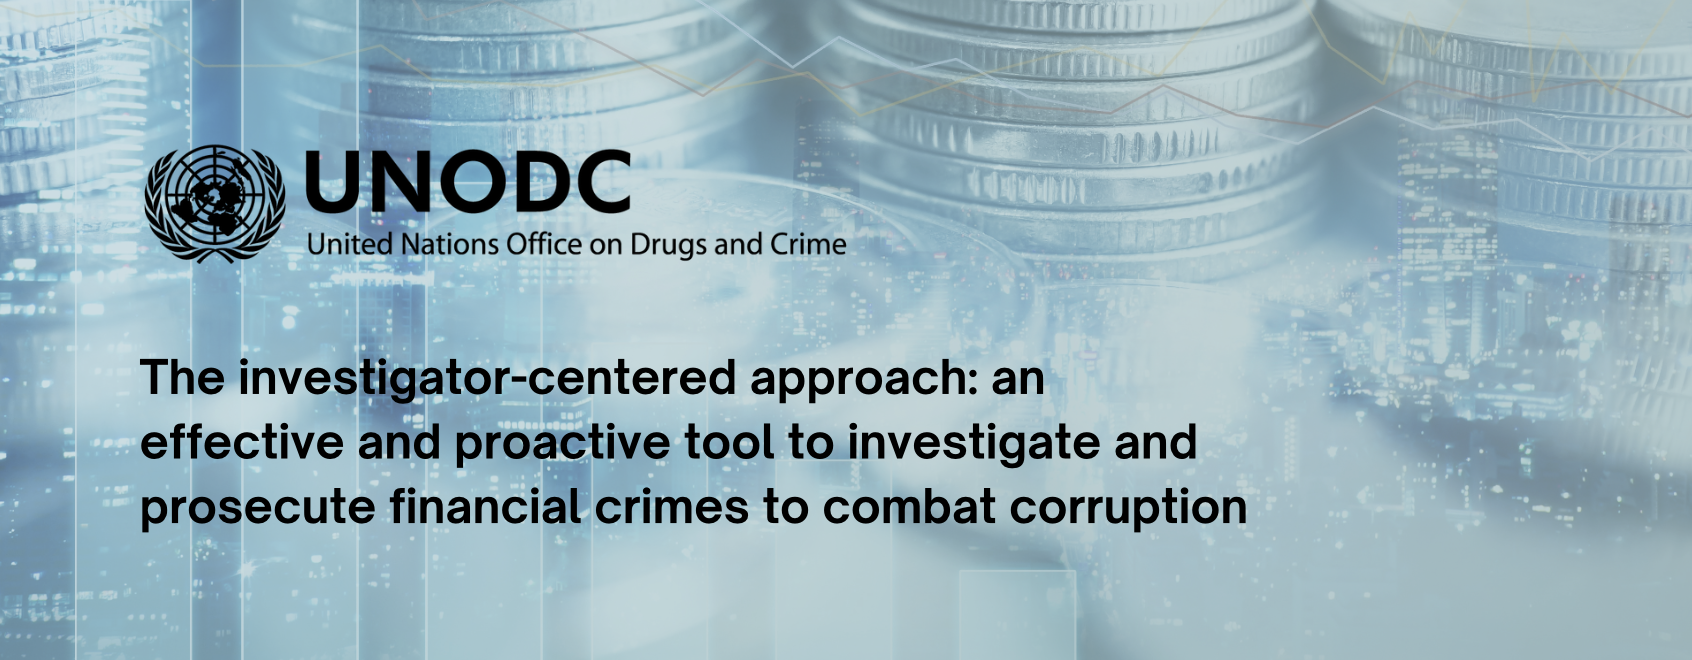 UNODC’s investigator-centered approach: an effective and proactive tool to investigate and prosecute financial crimes